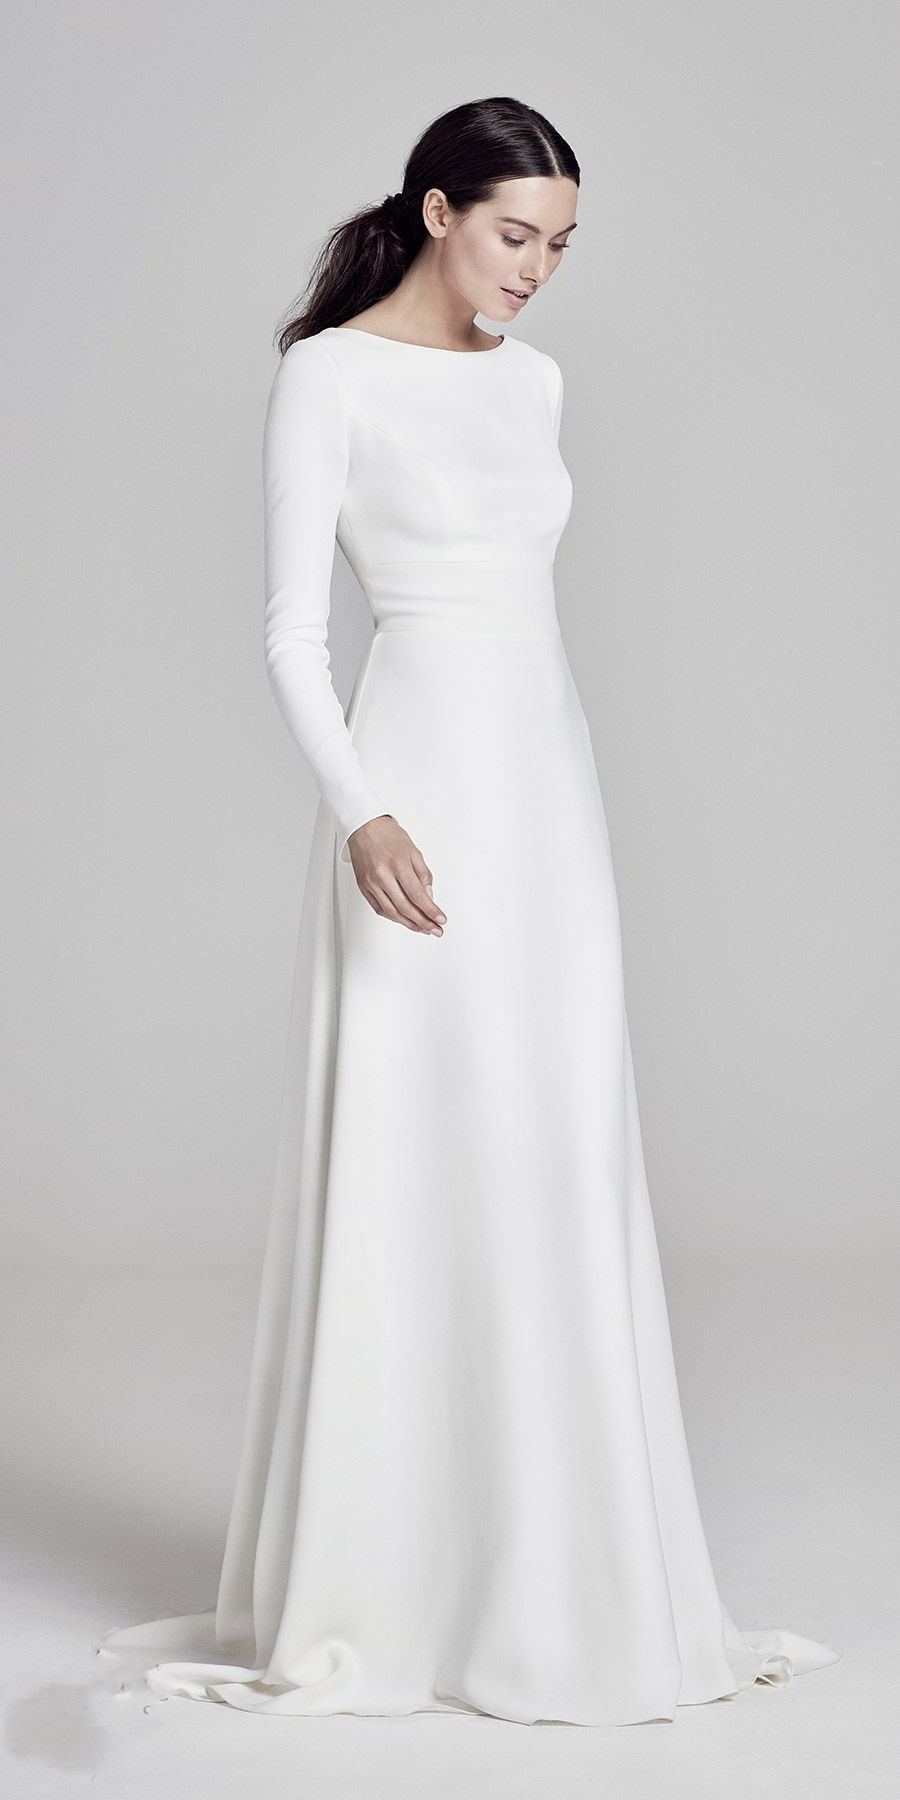 Elegant Satin Floor Length Wedding Dress,Simple Round Neck Long Sleeves Bridal Dress.W651 -   18 dress Simple pictures ideas